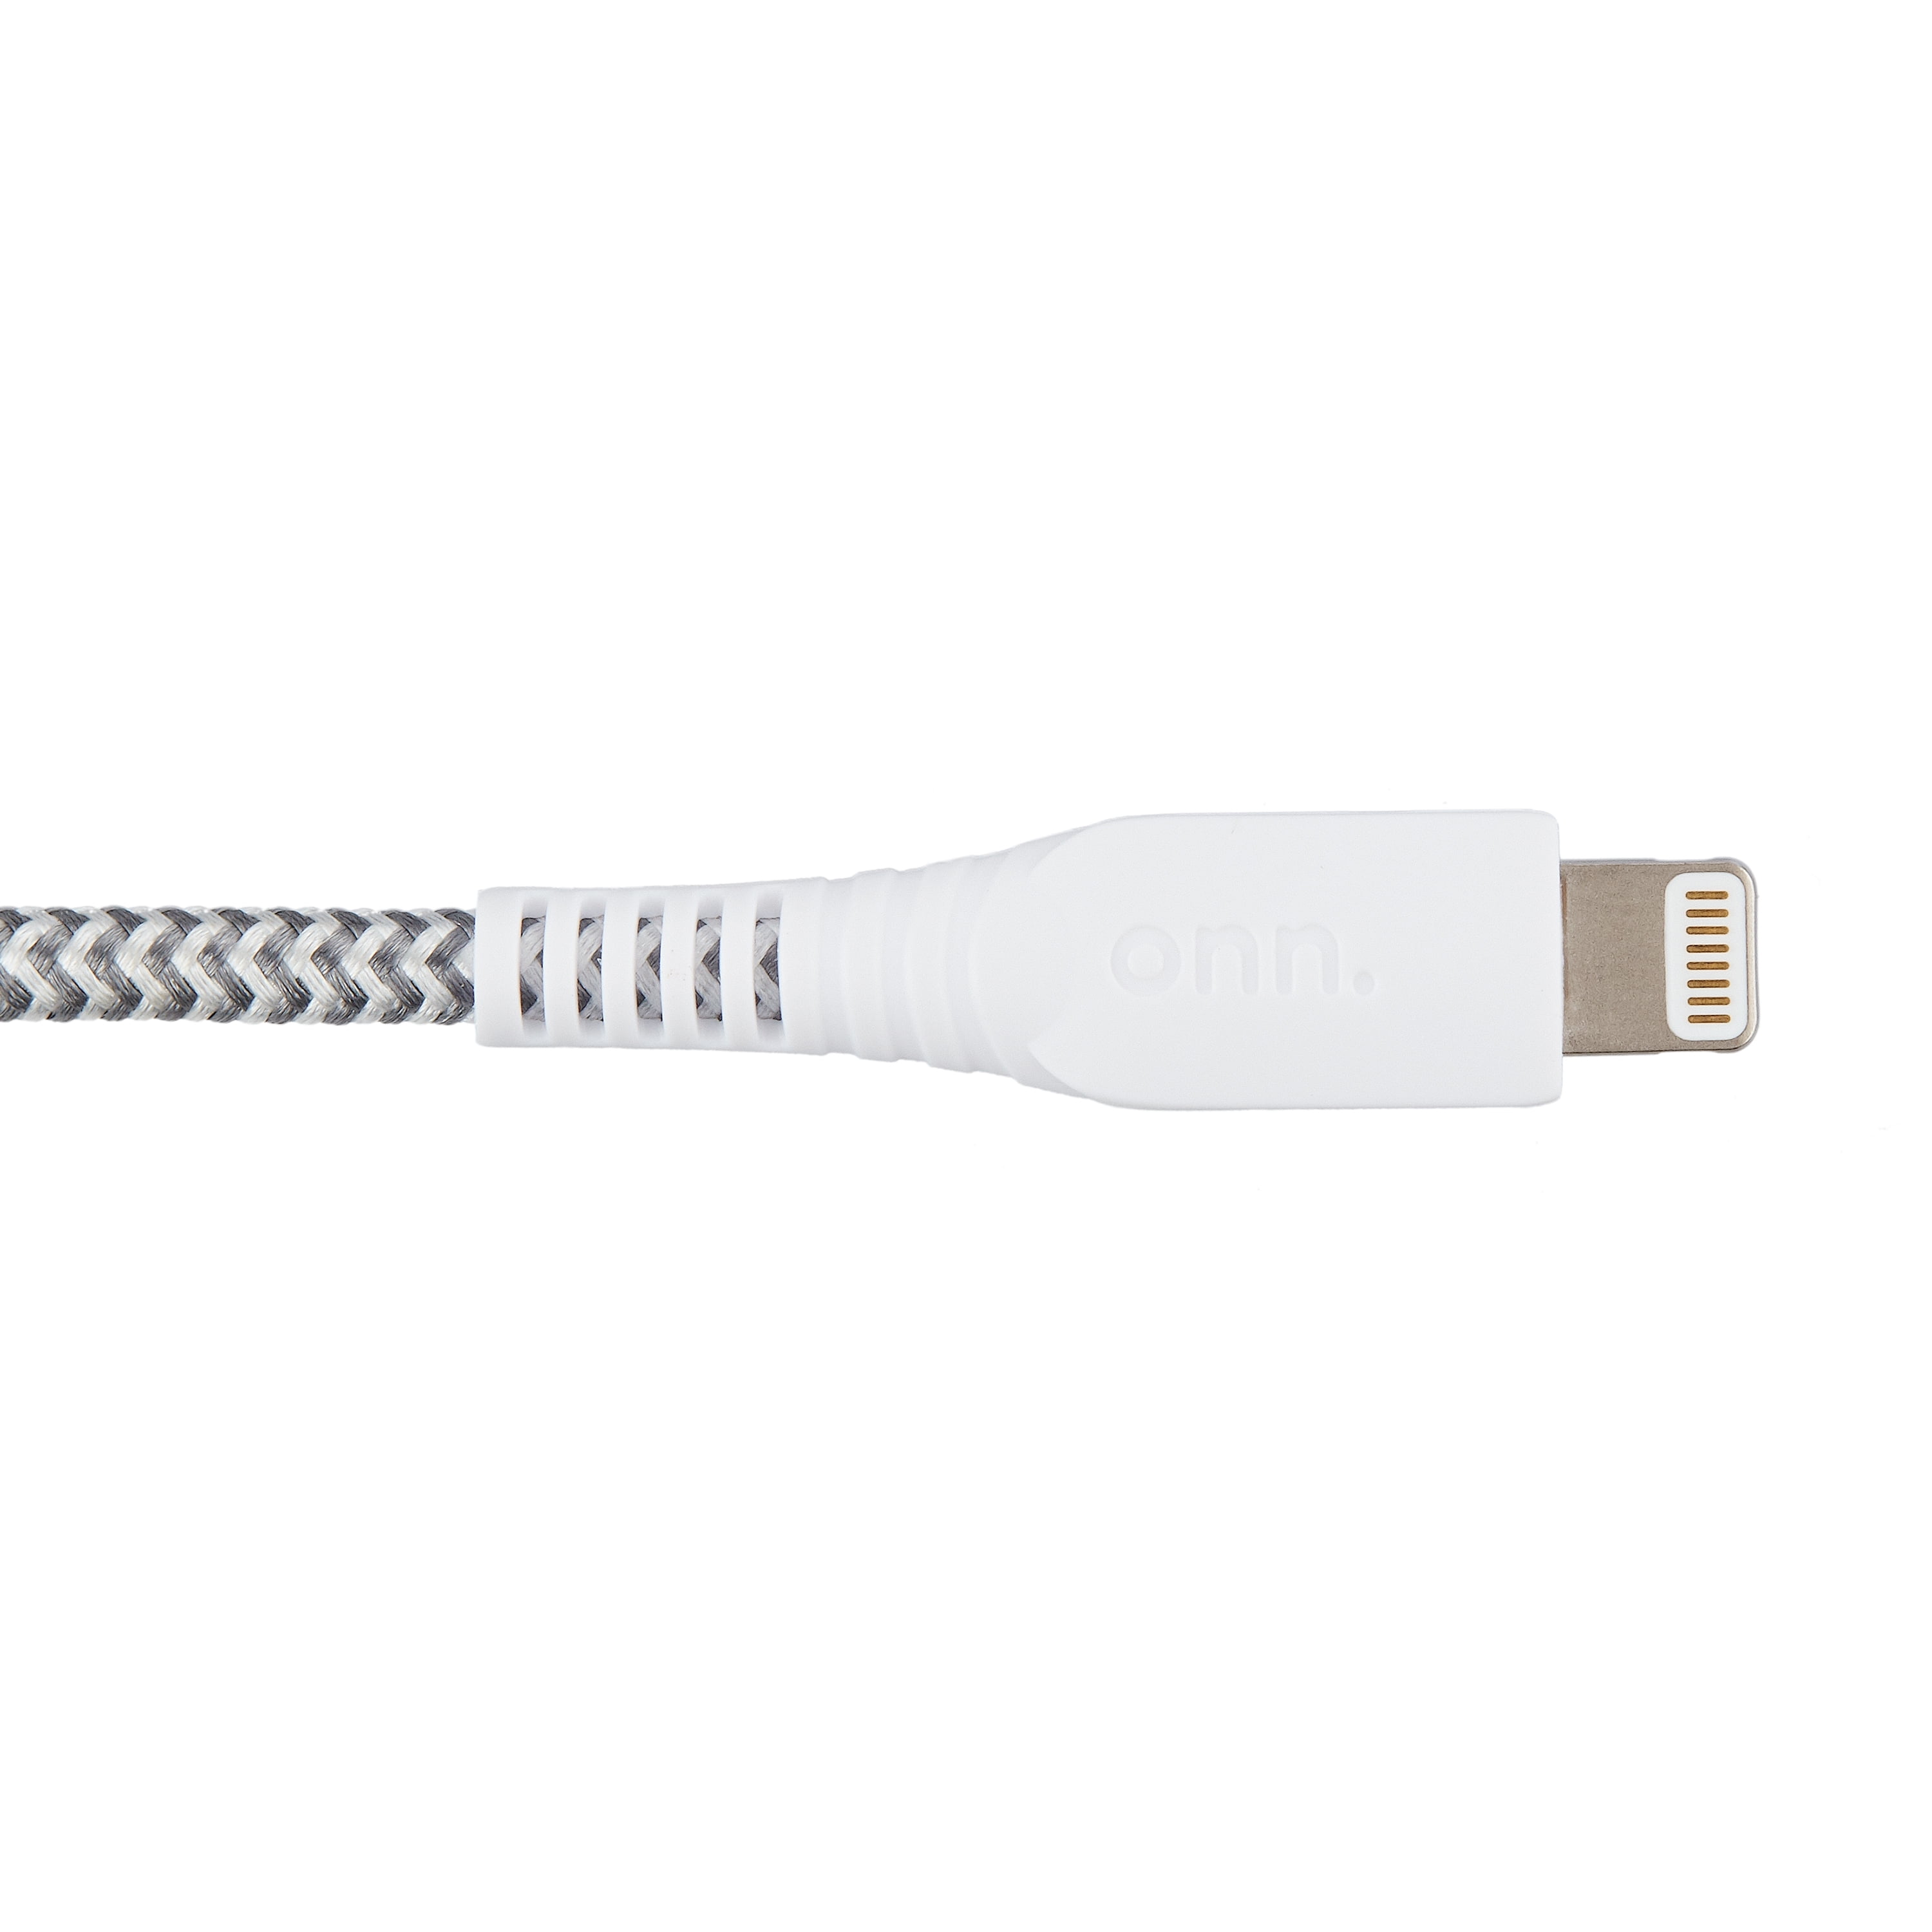 onn. 6' Braided USB-C to USB Cable, Aqua